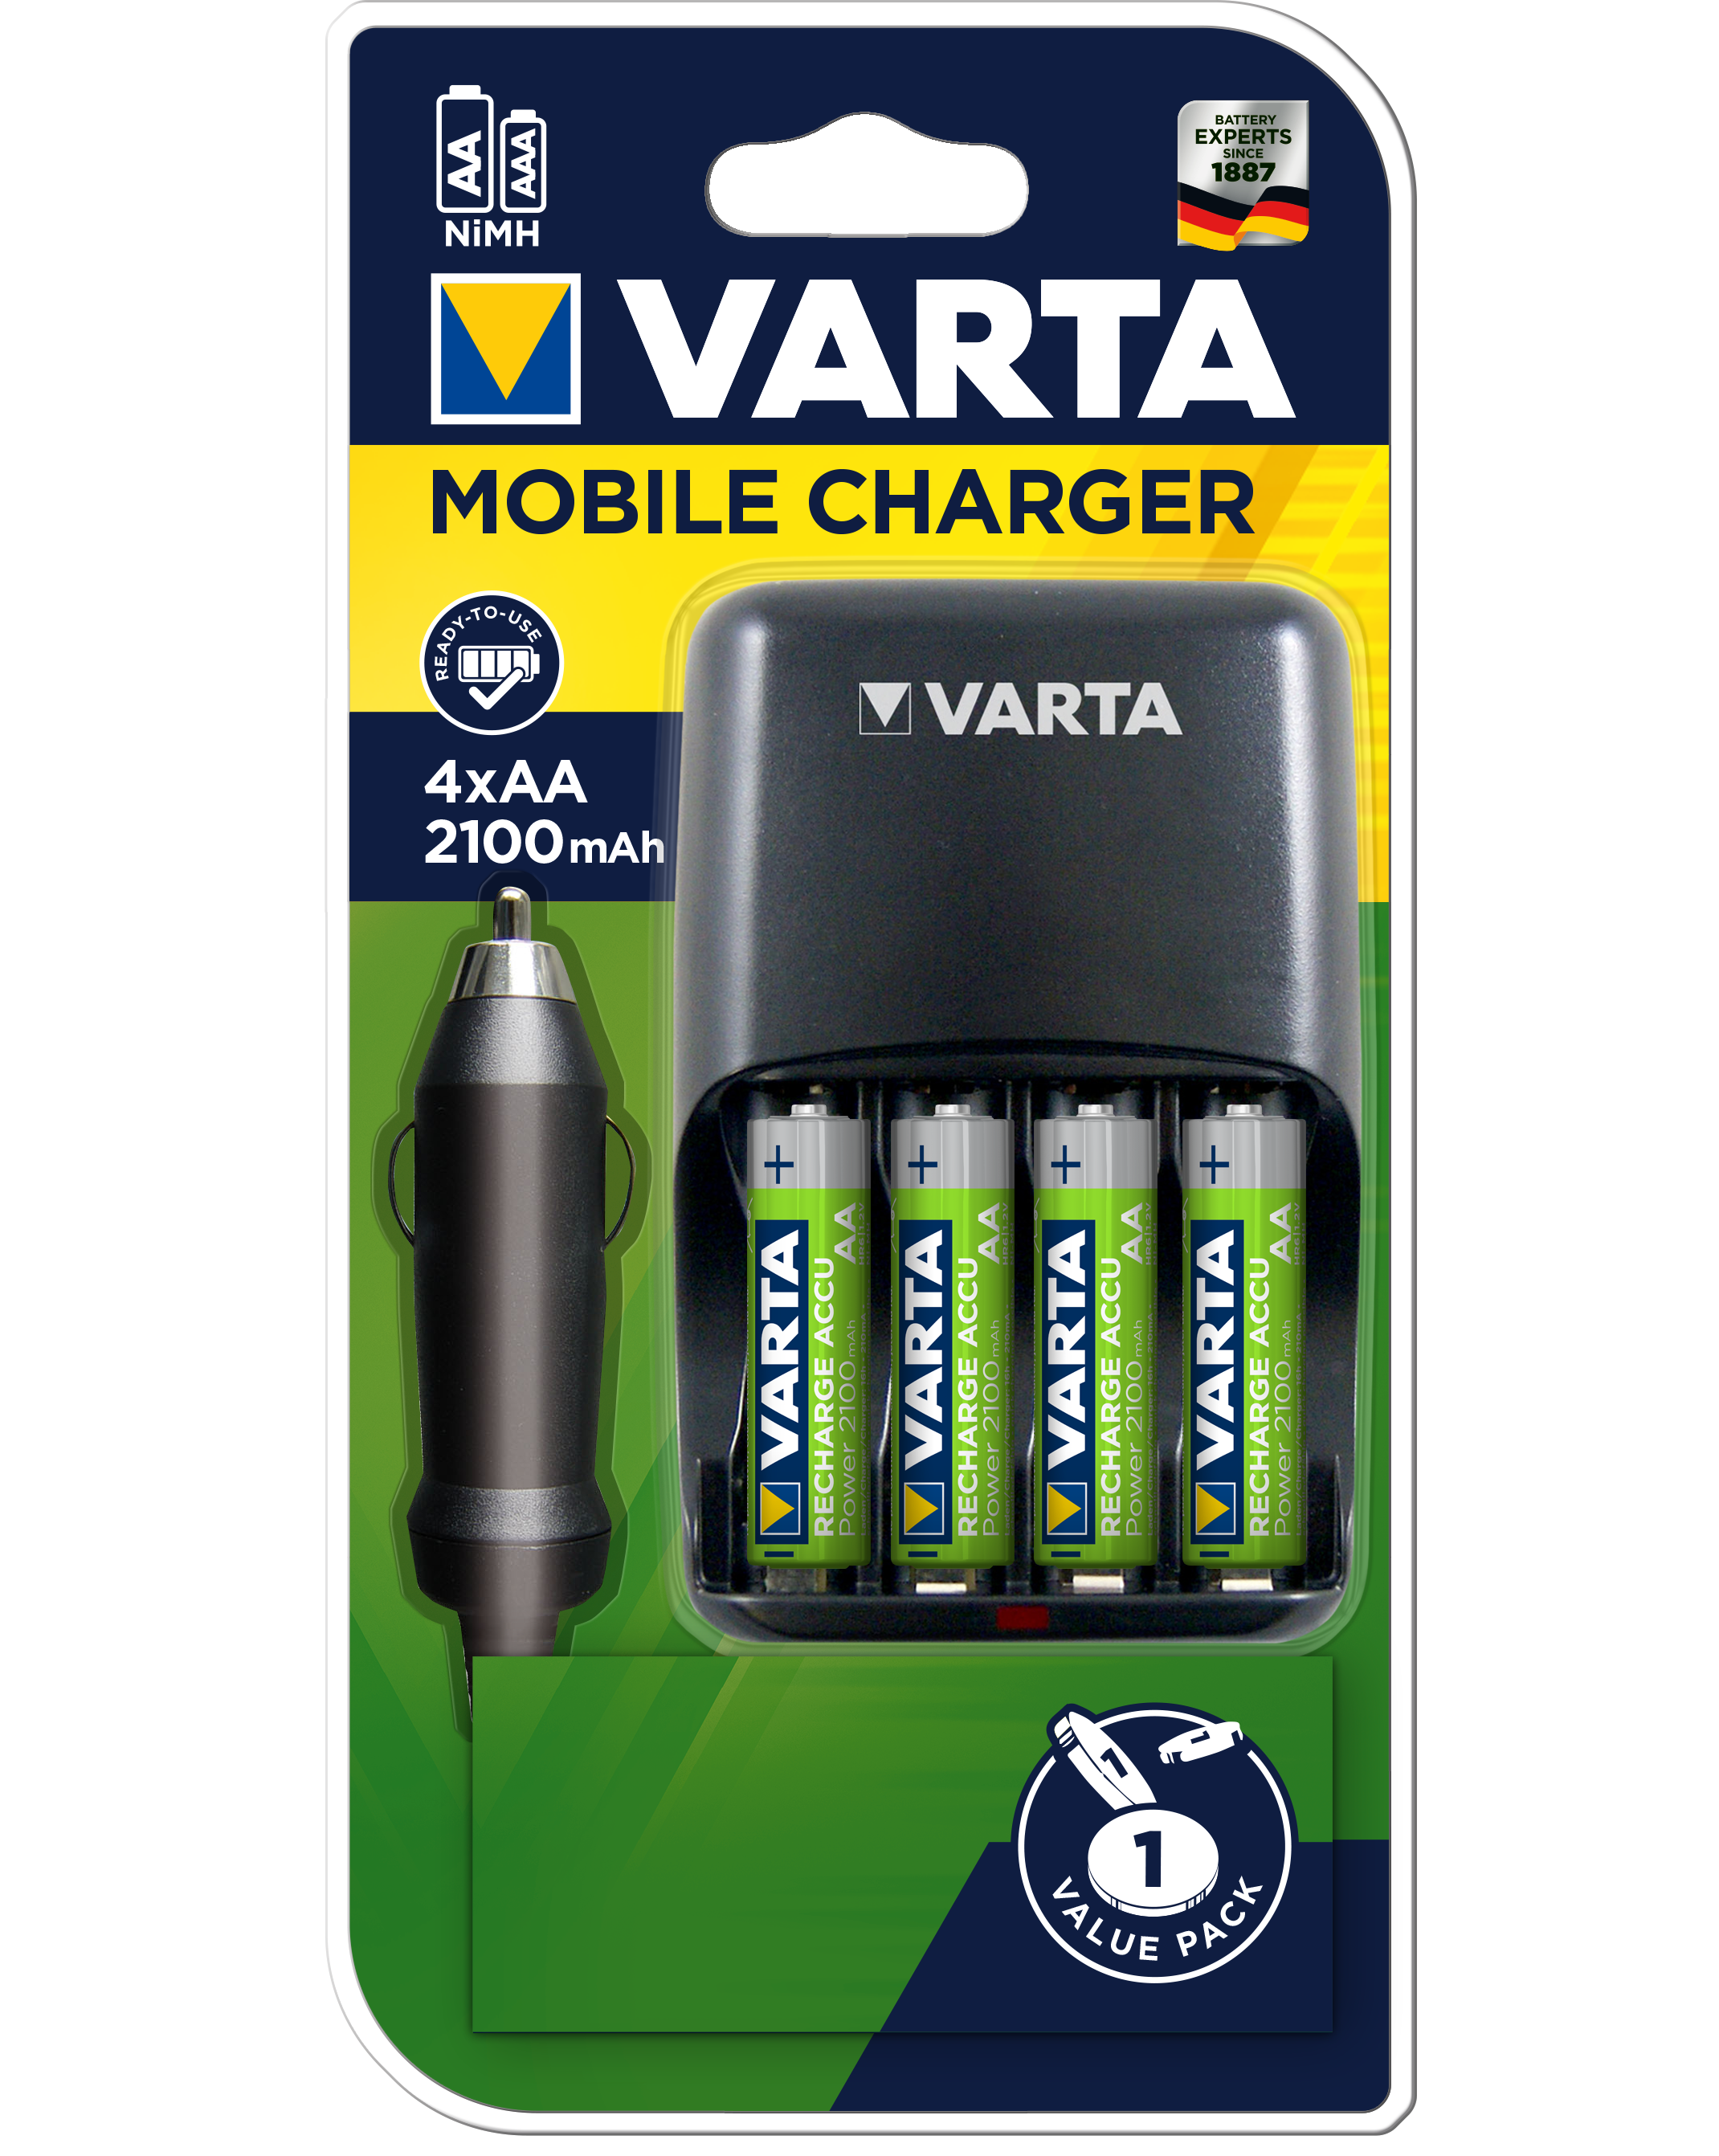 Зарядное ус-во VARTA Mobile Charger +4AA 2100mAh car adaptor